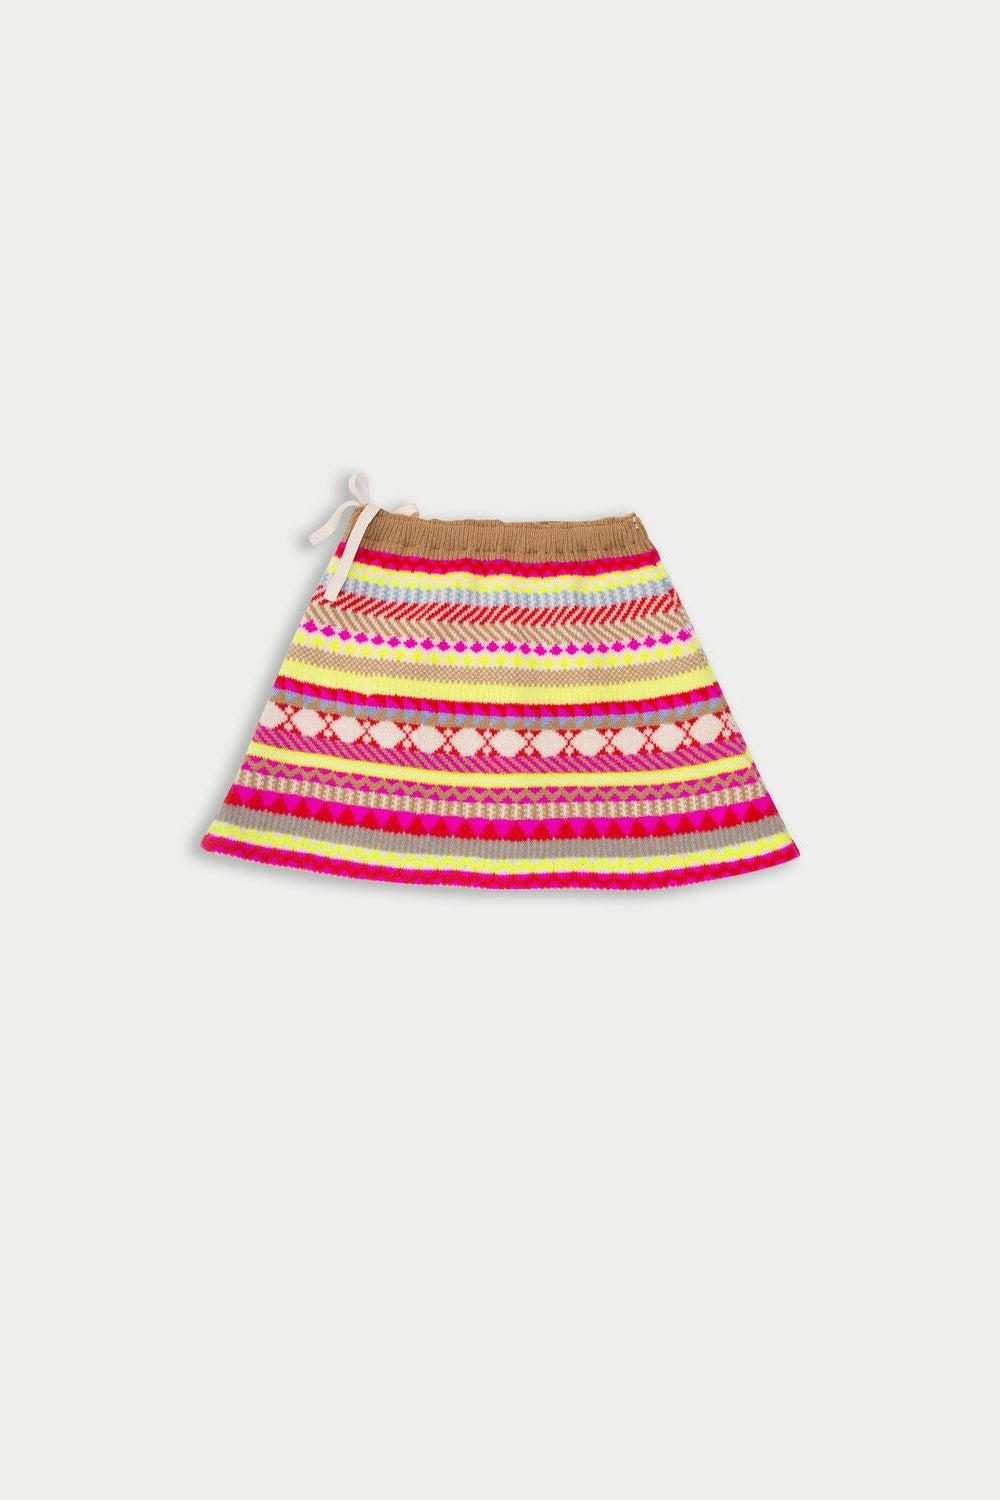 Pieps Fairisle Skirt-Skirt-LA FETICHE-Debs Boutique